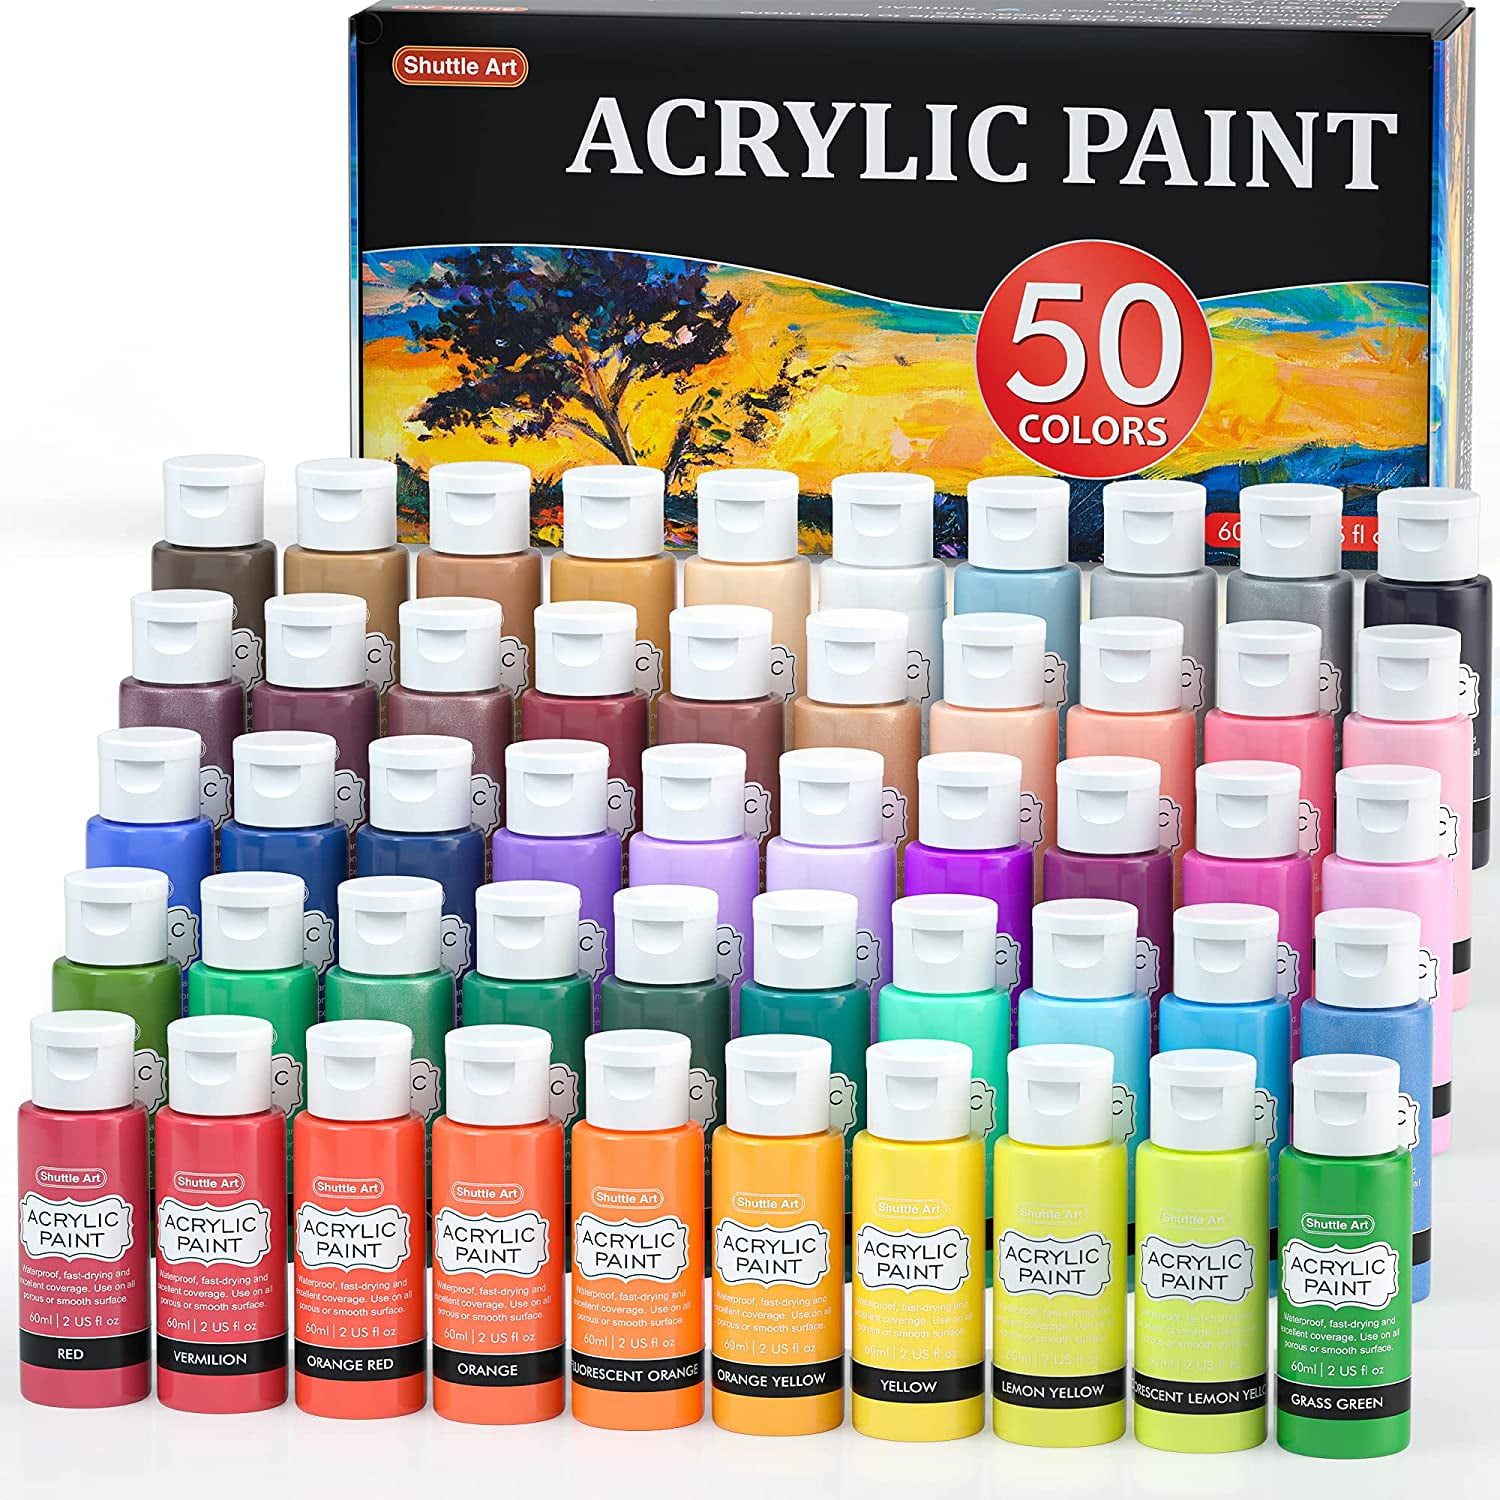 Acrylic Paint, Shuttle Art 50 Colors Acrylic Paint Set, 2oz/60ml